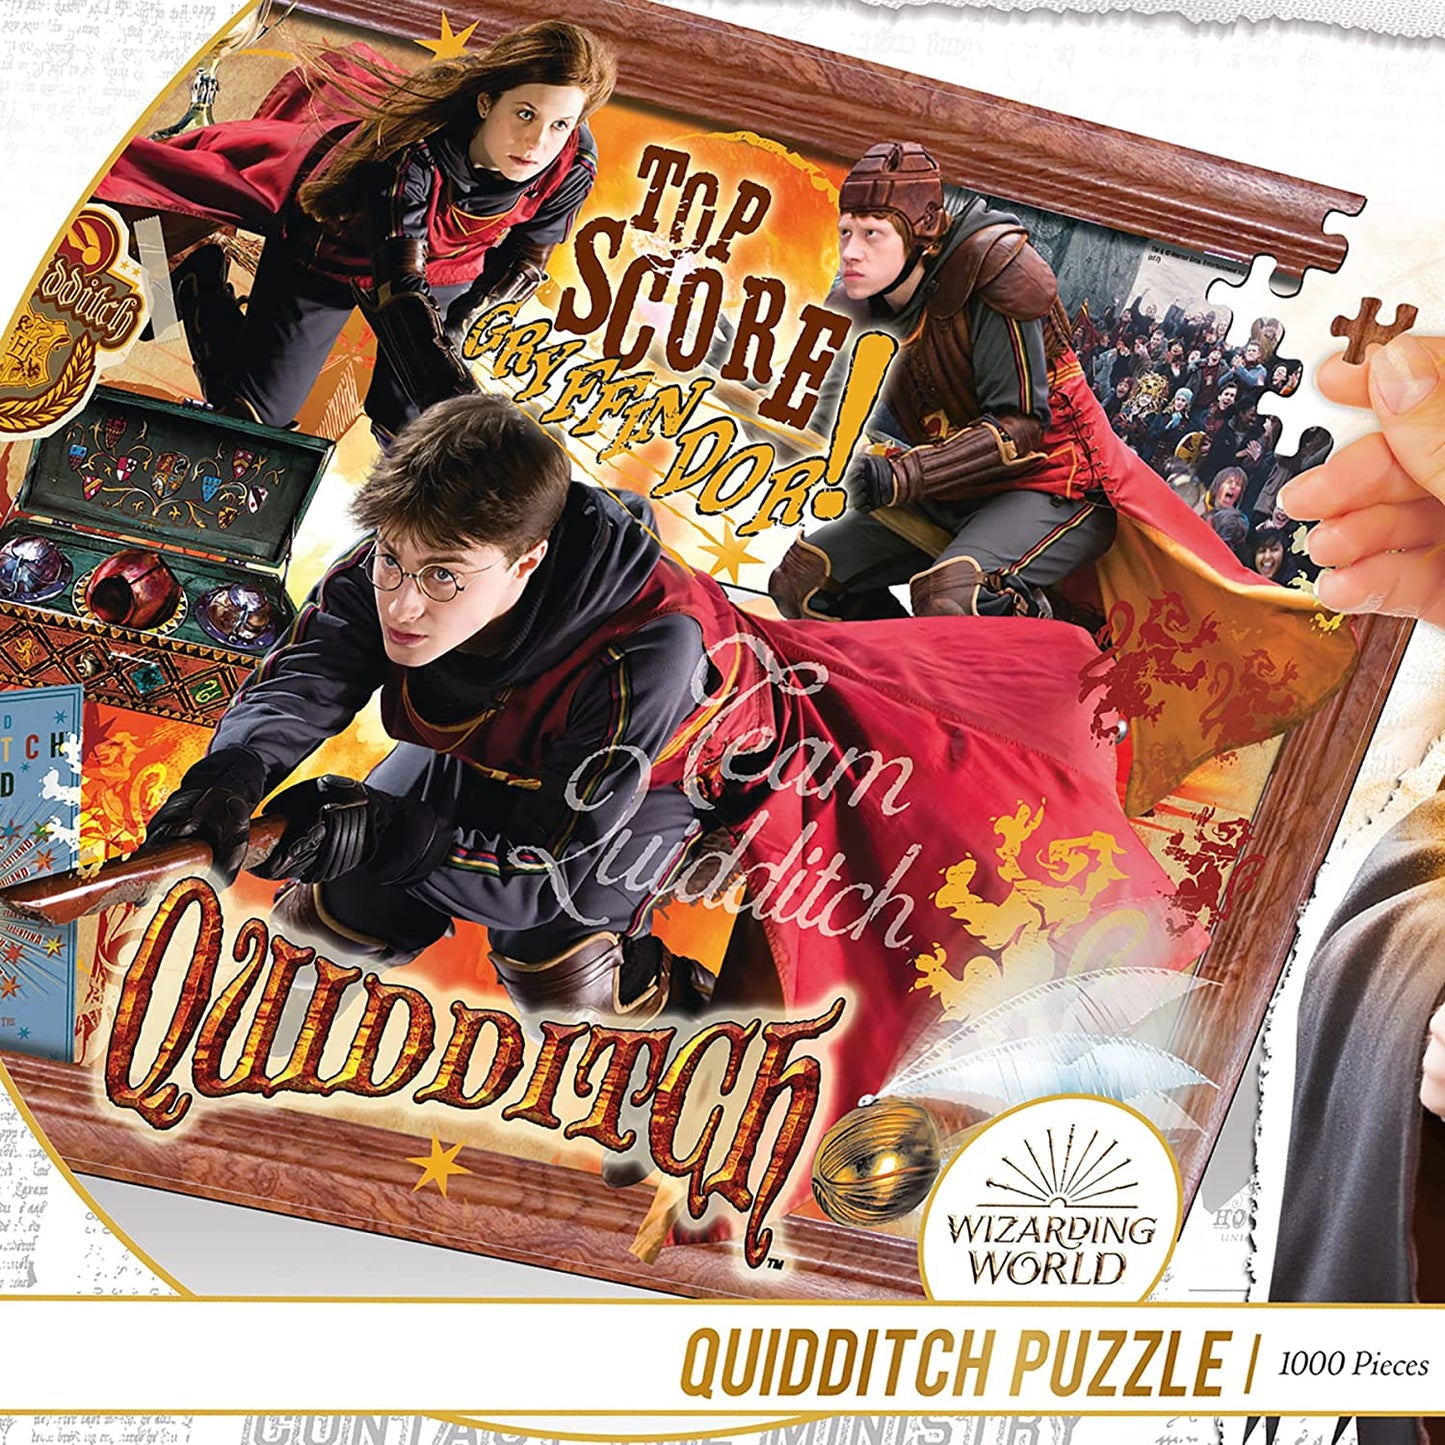 Puzzle (1000 Teile) - Harry Potter Quidditch - Harry Potter Fanartikel - Alter 10+